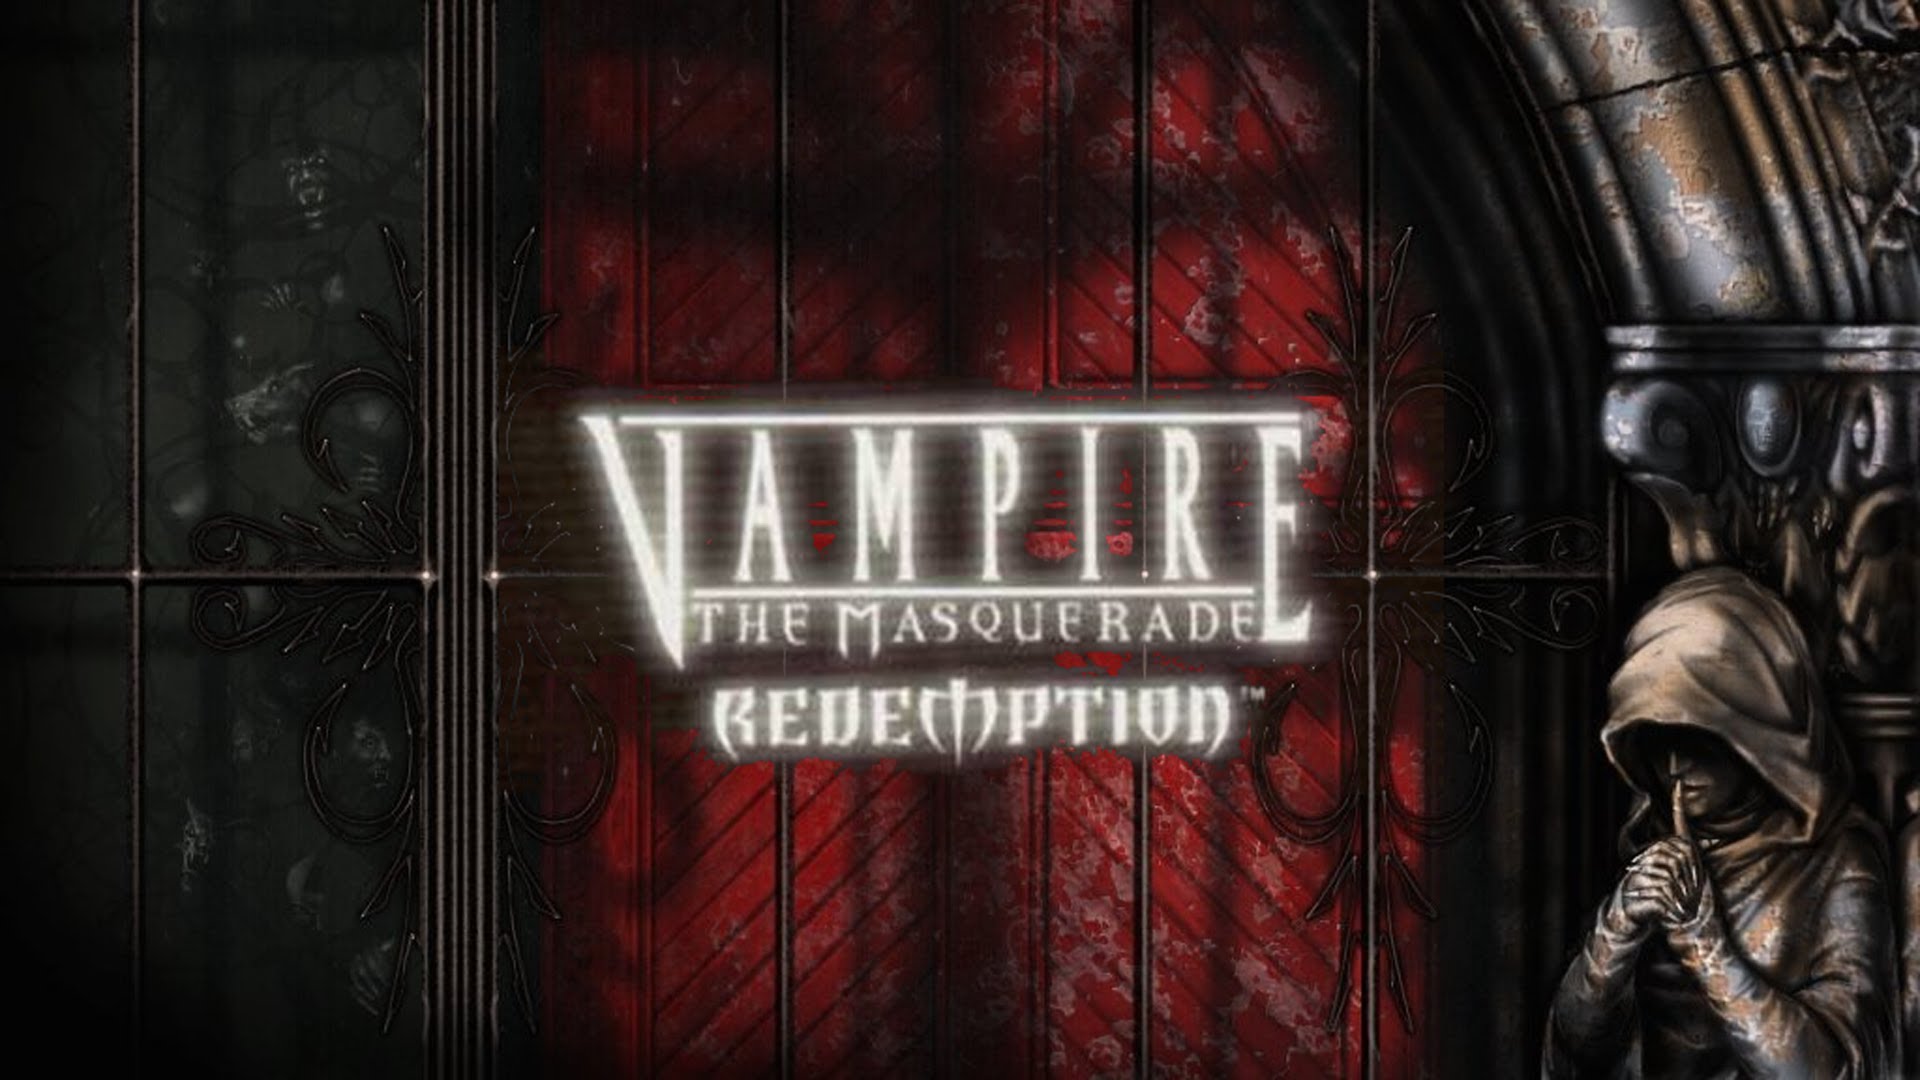 Vampire: The Masquerade: Redemption